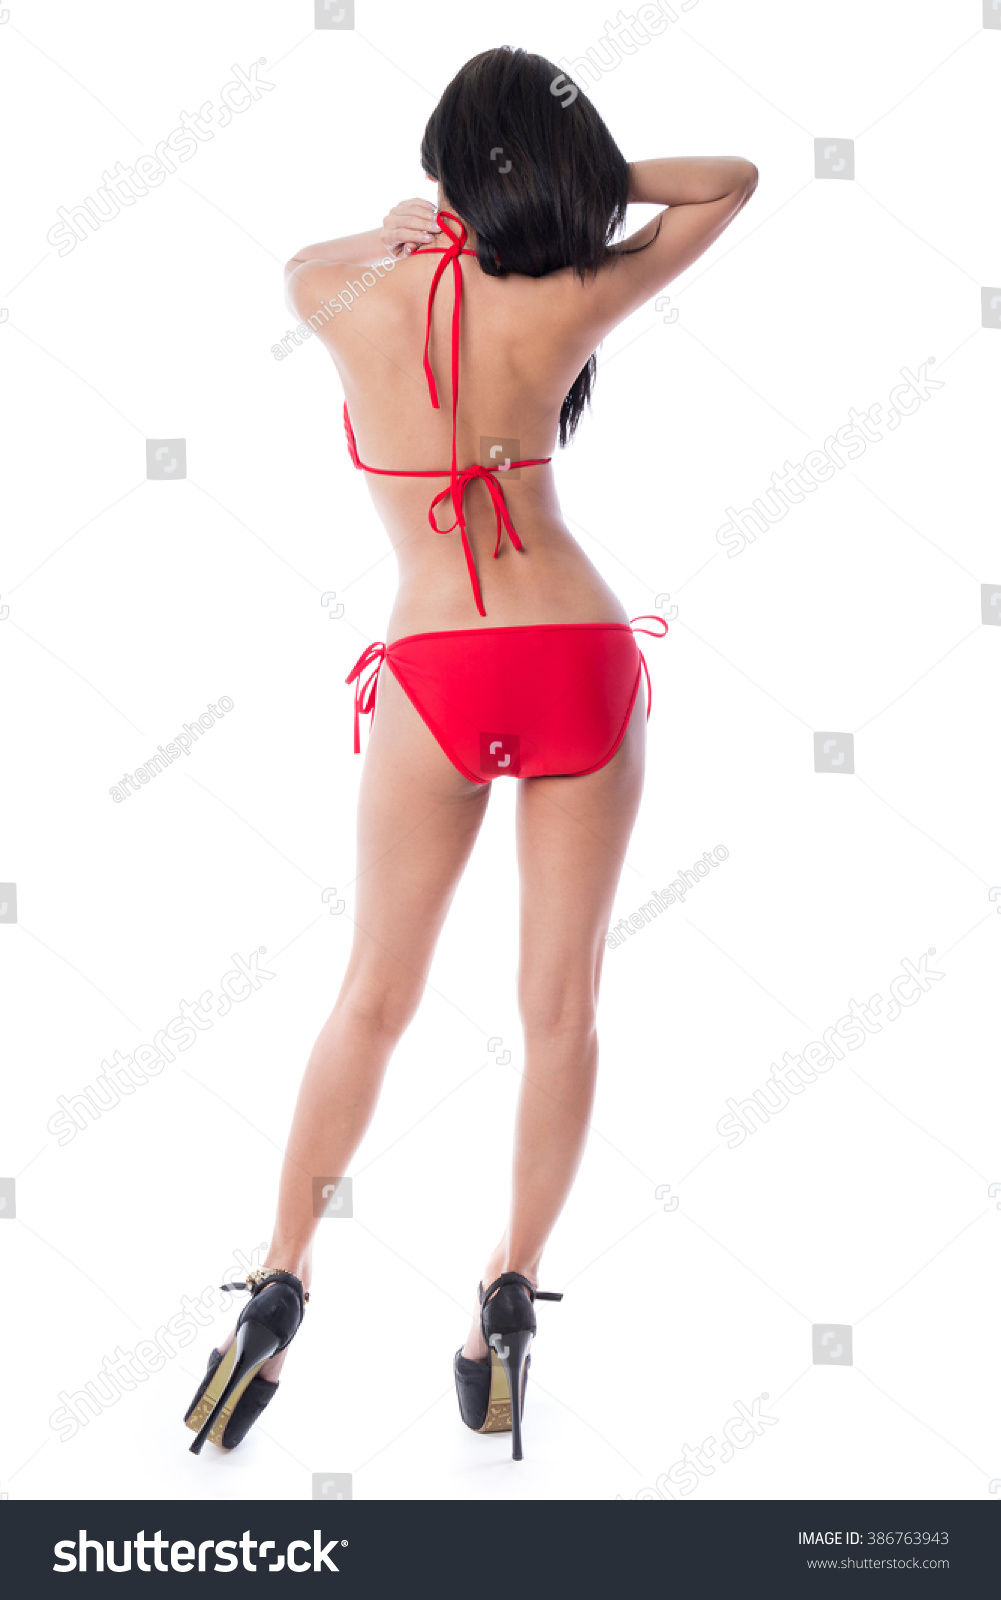 Hot asian teens in bikinis Sexy Asian Girl Wearing Red Bikini Stock Photo Edit Now 386763943